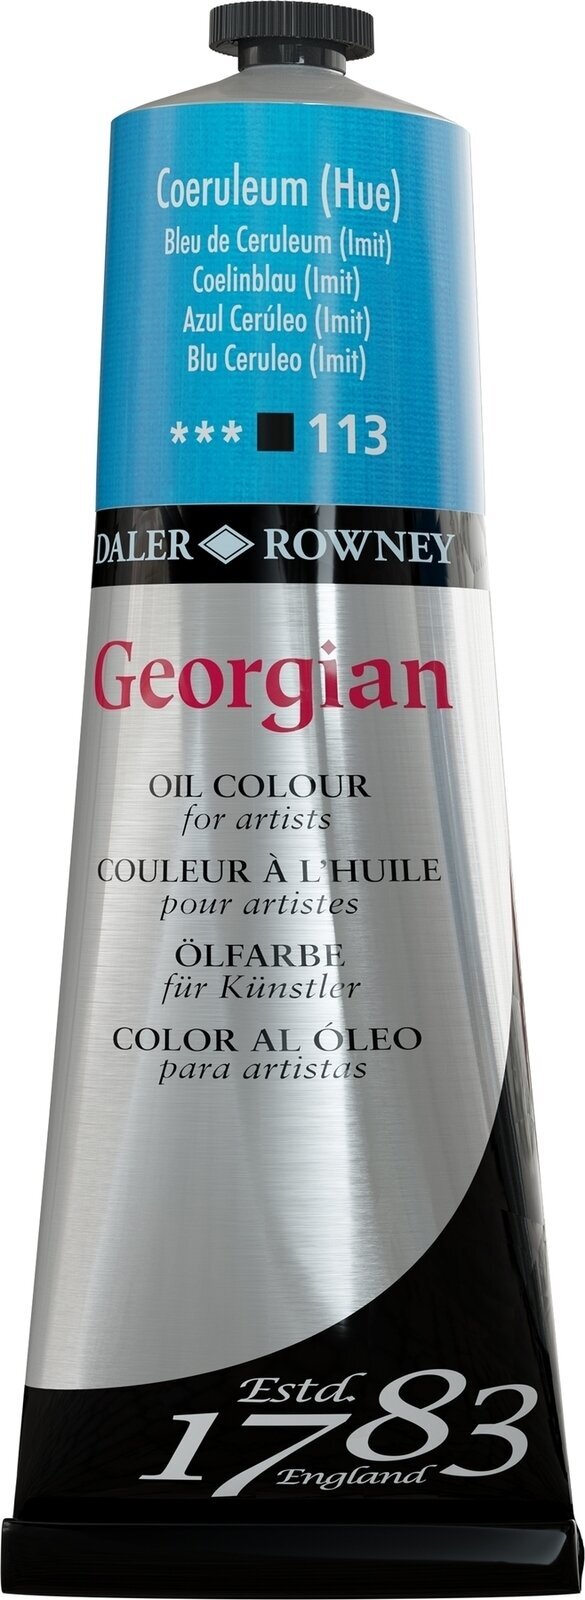 Oil colour Daler Rowney Georgian Oil Paint Coeruleum Hue 225 ml 1 pc